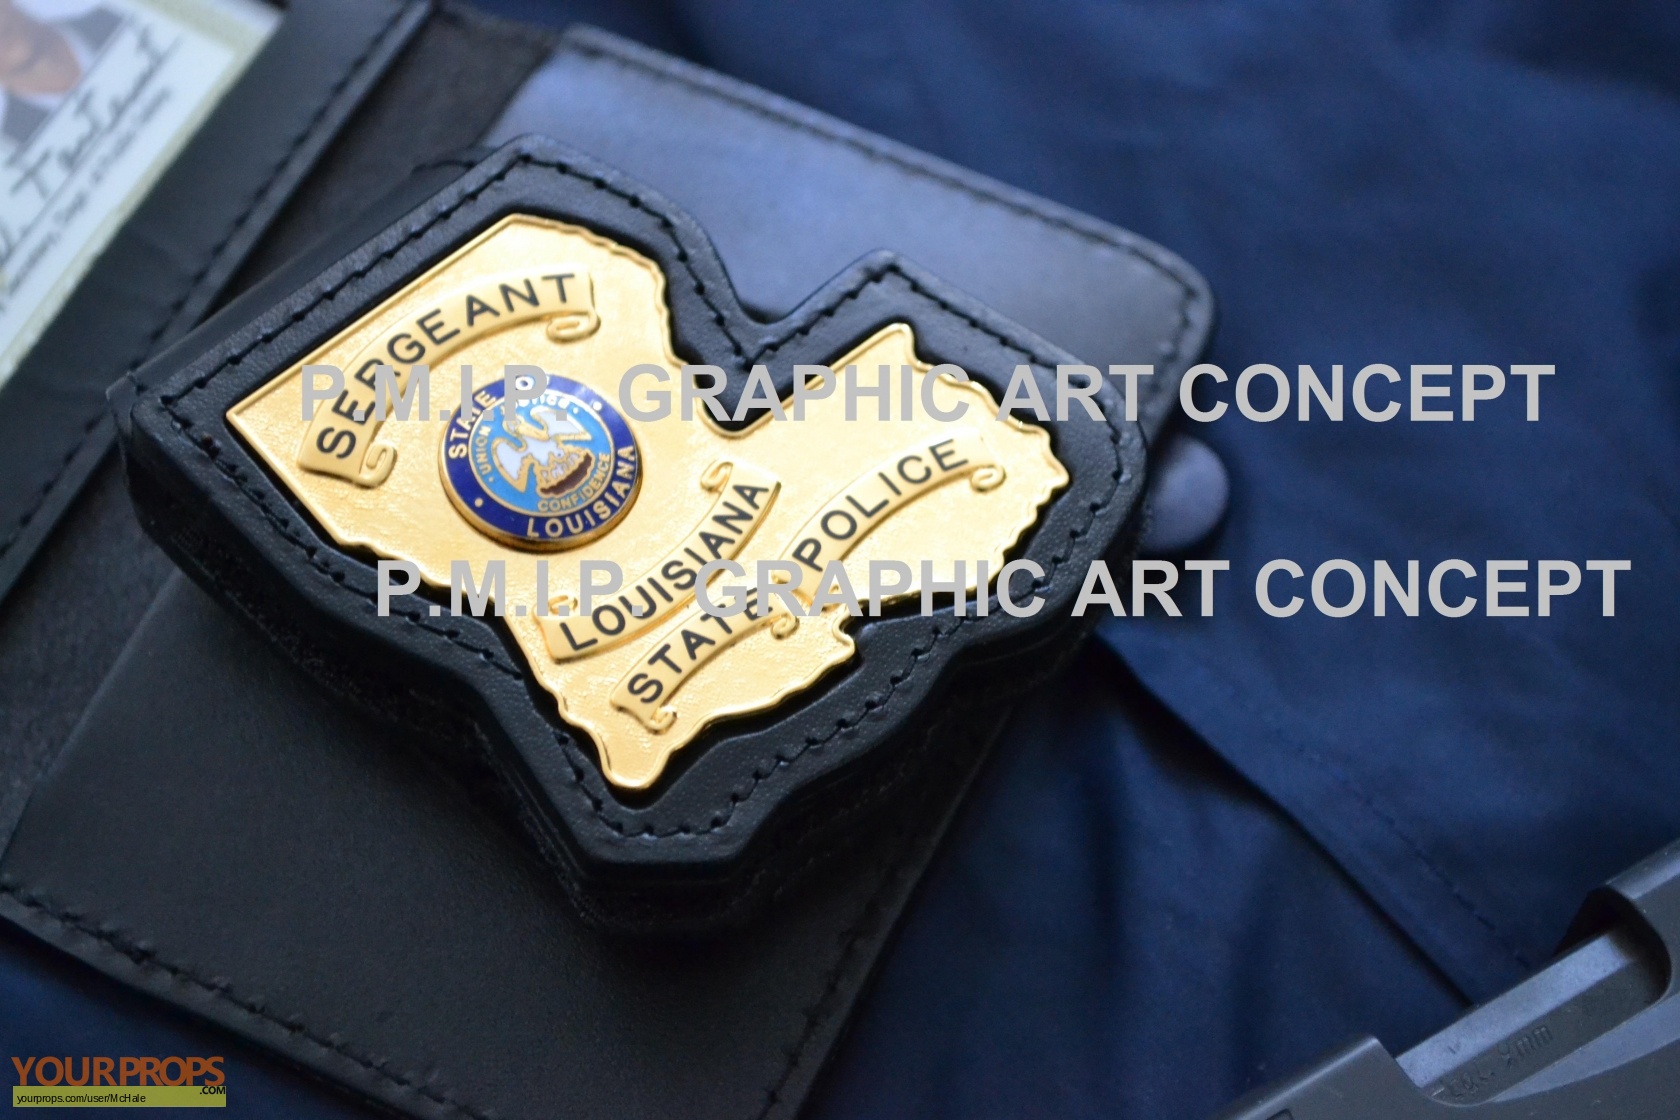 Louisiana State Police Badge (True Detective)